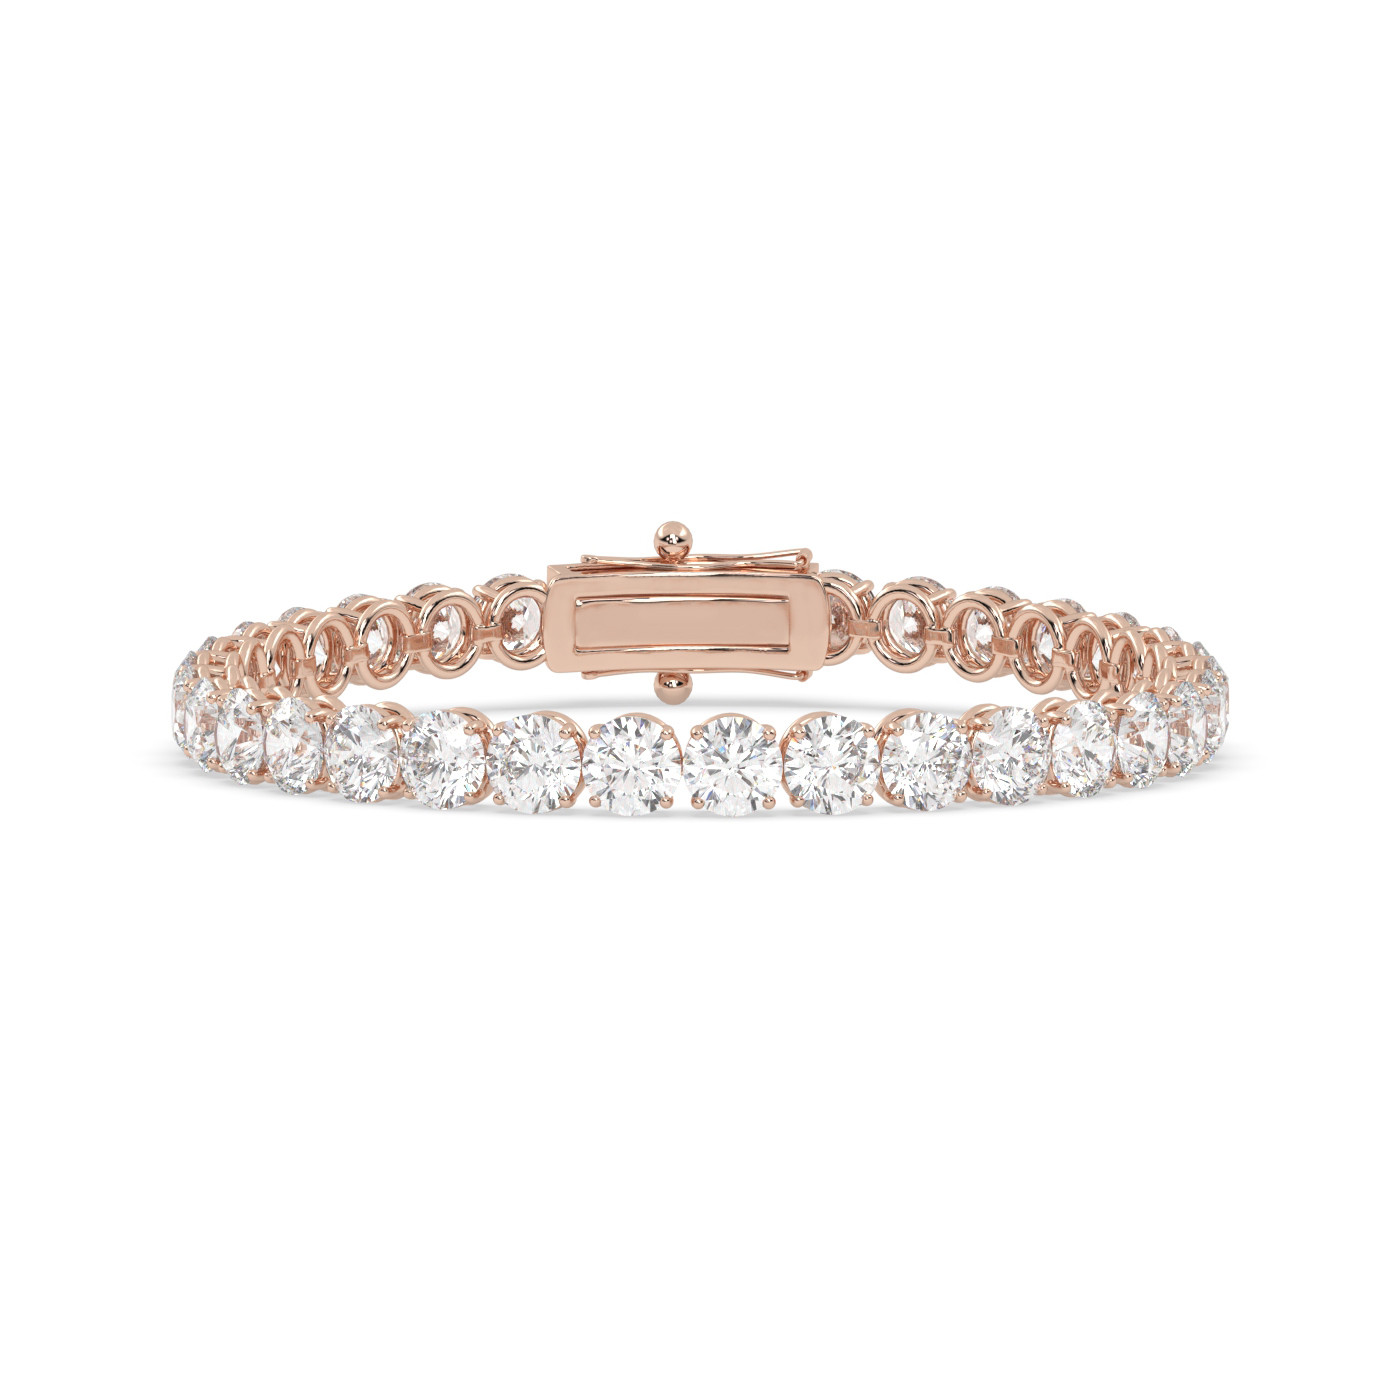 18k rose gold 10 carat round diamond tennis bracelet with traditional lock sytem Photos & images